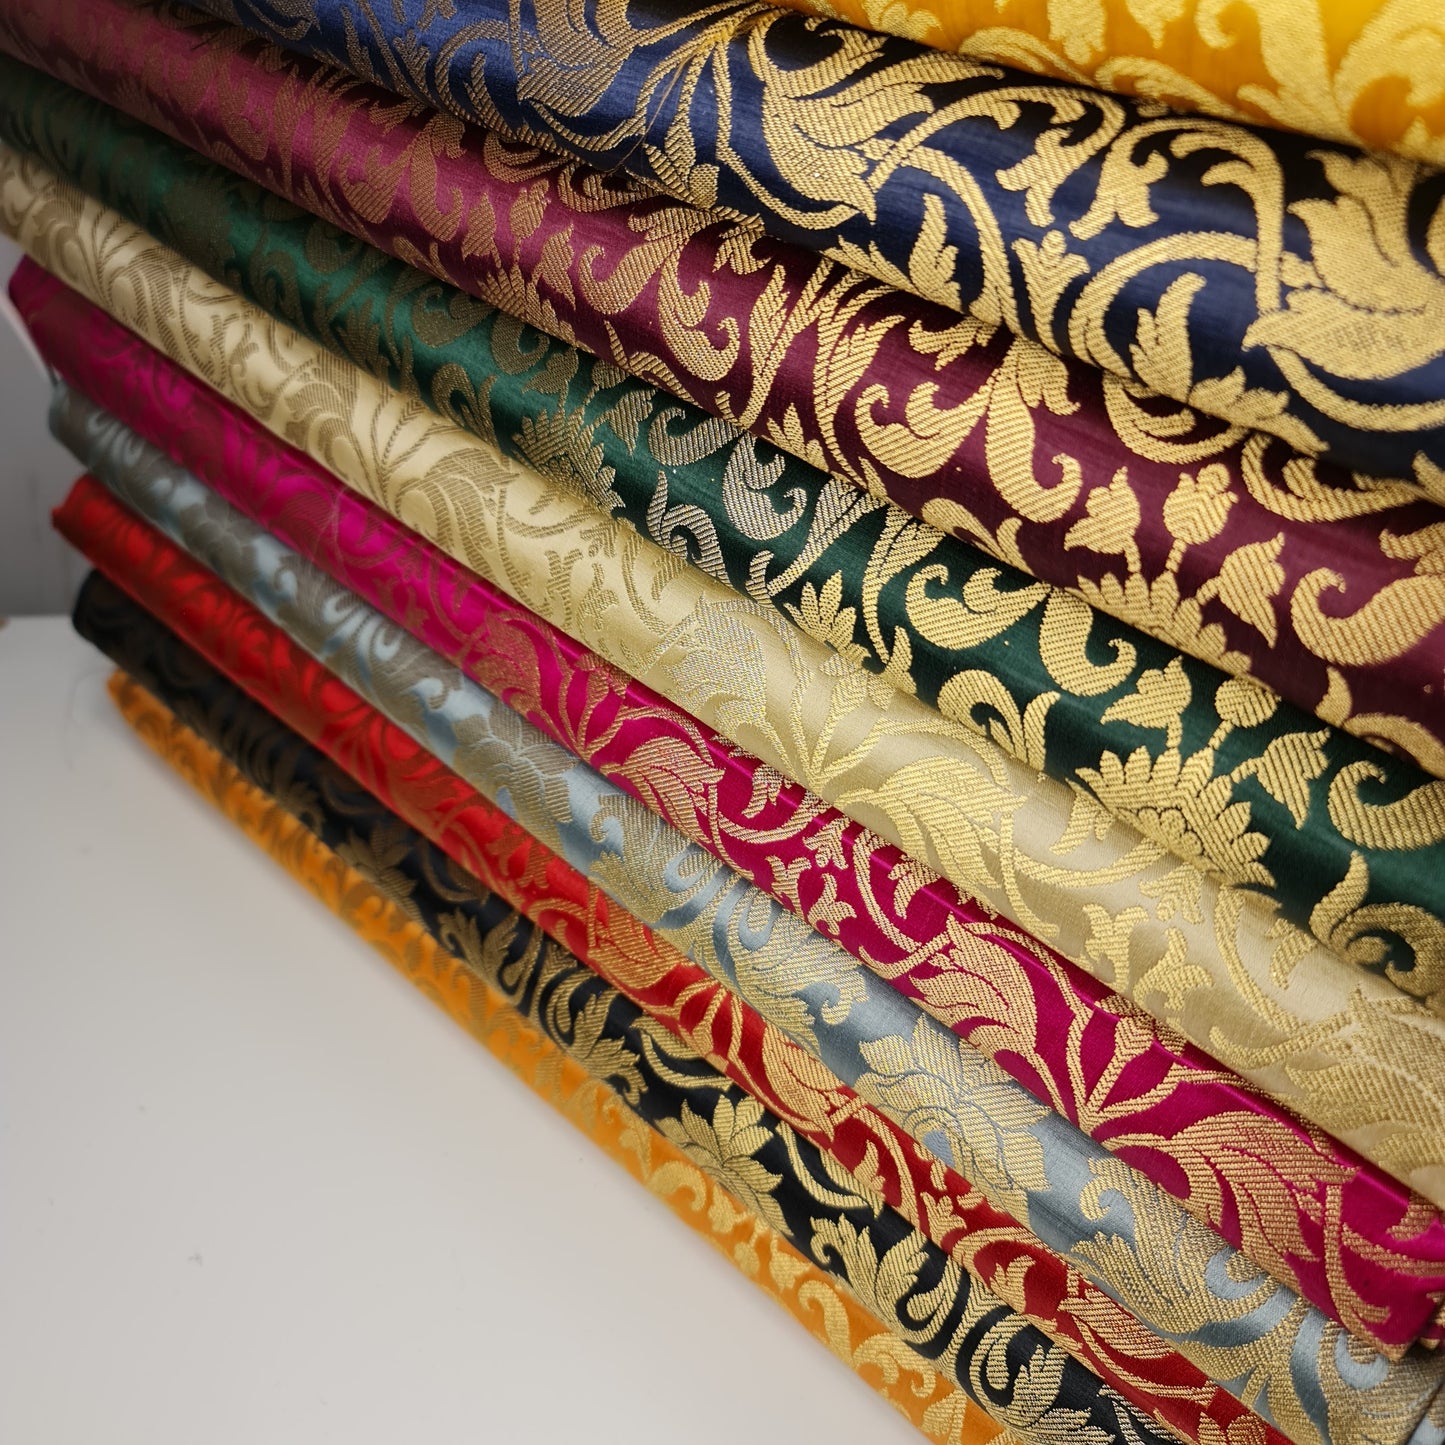 Luxurious Floral Gold Metallic Indian Banarasi Brocade Fabric 44" By The Meter (BURGUNDY)